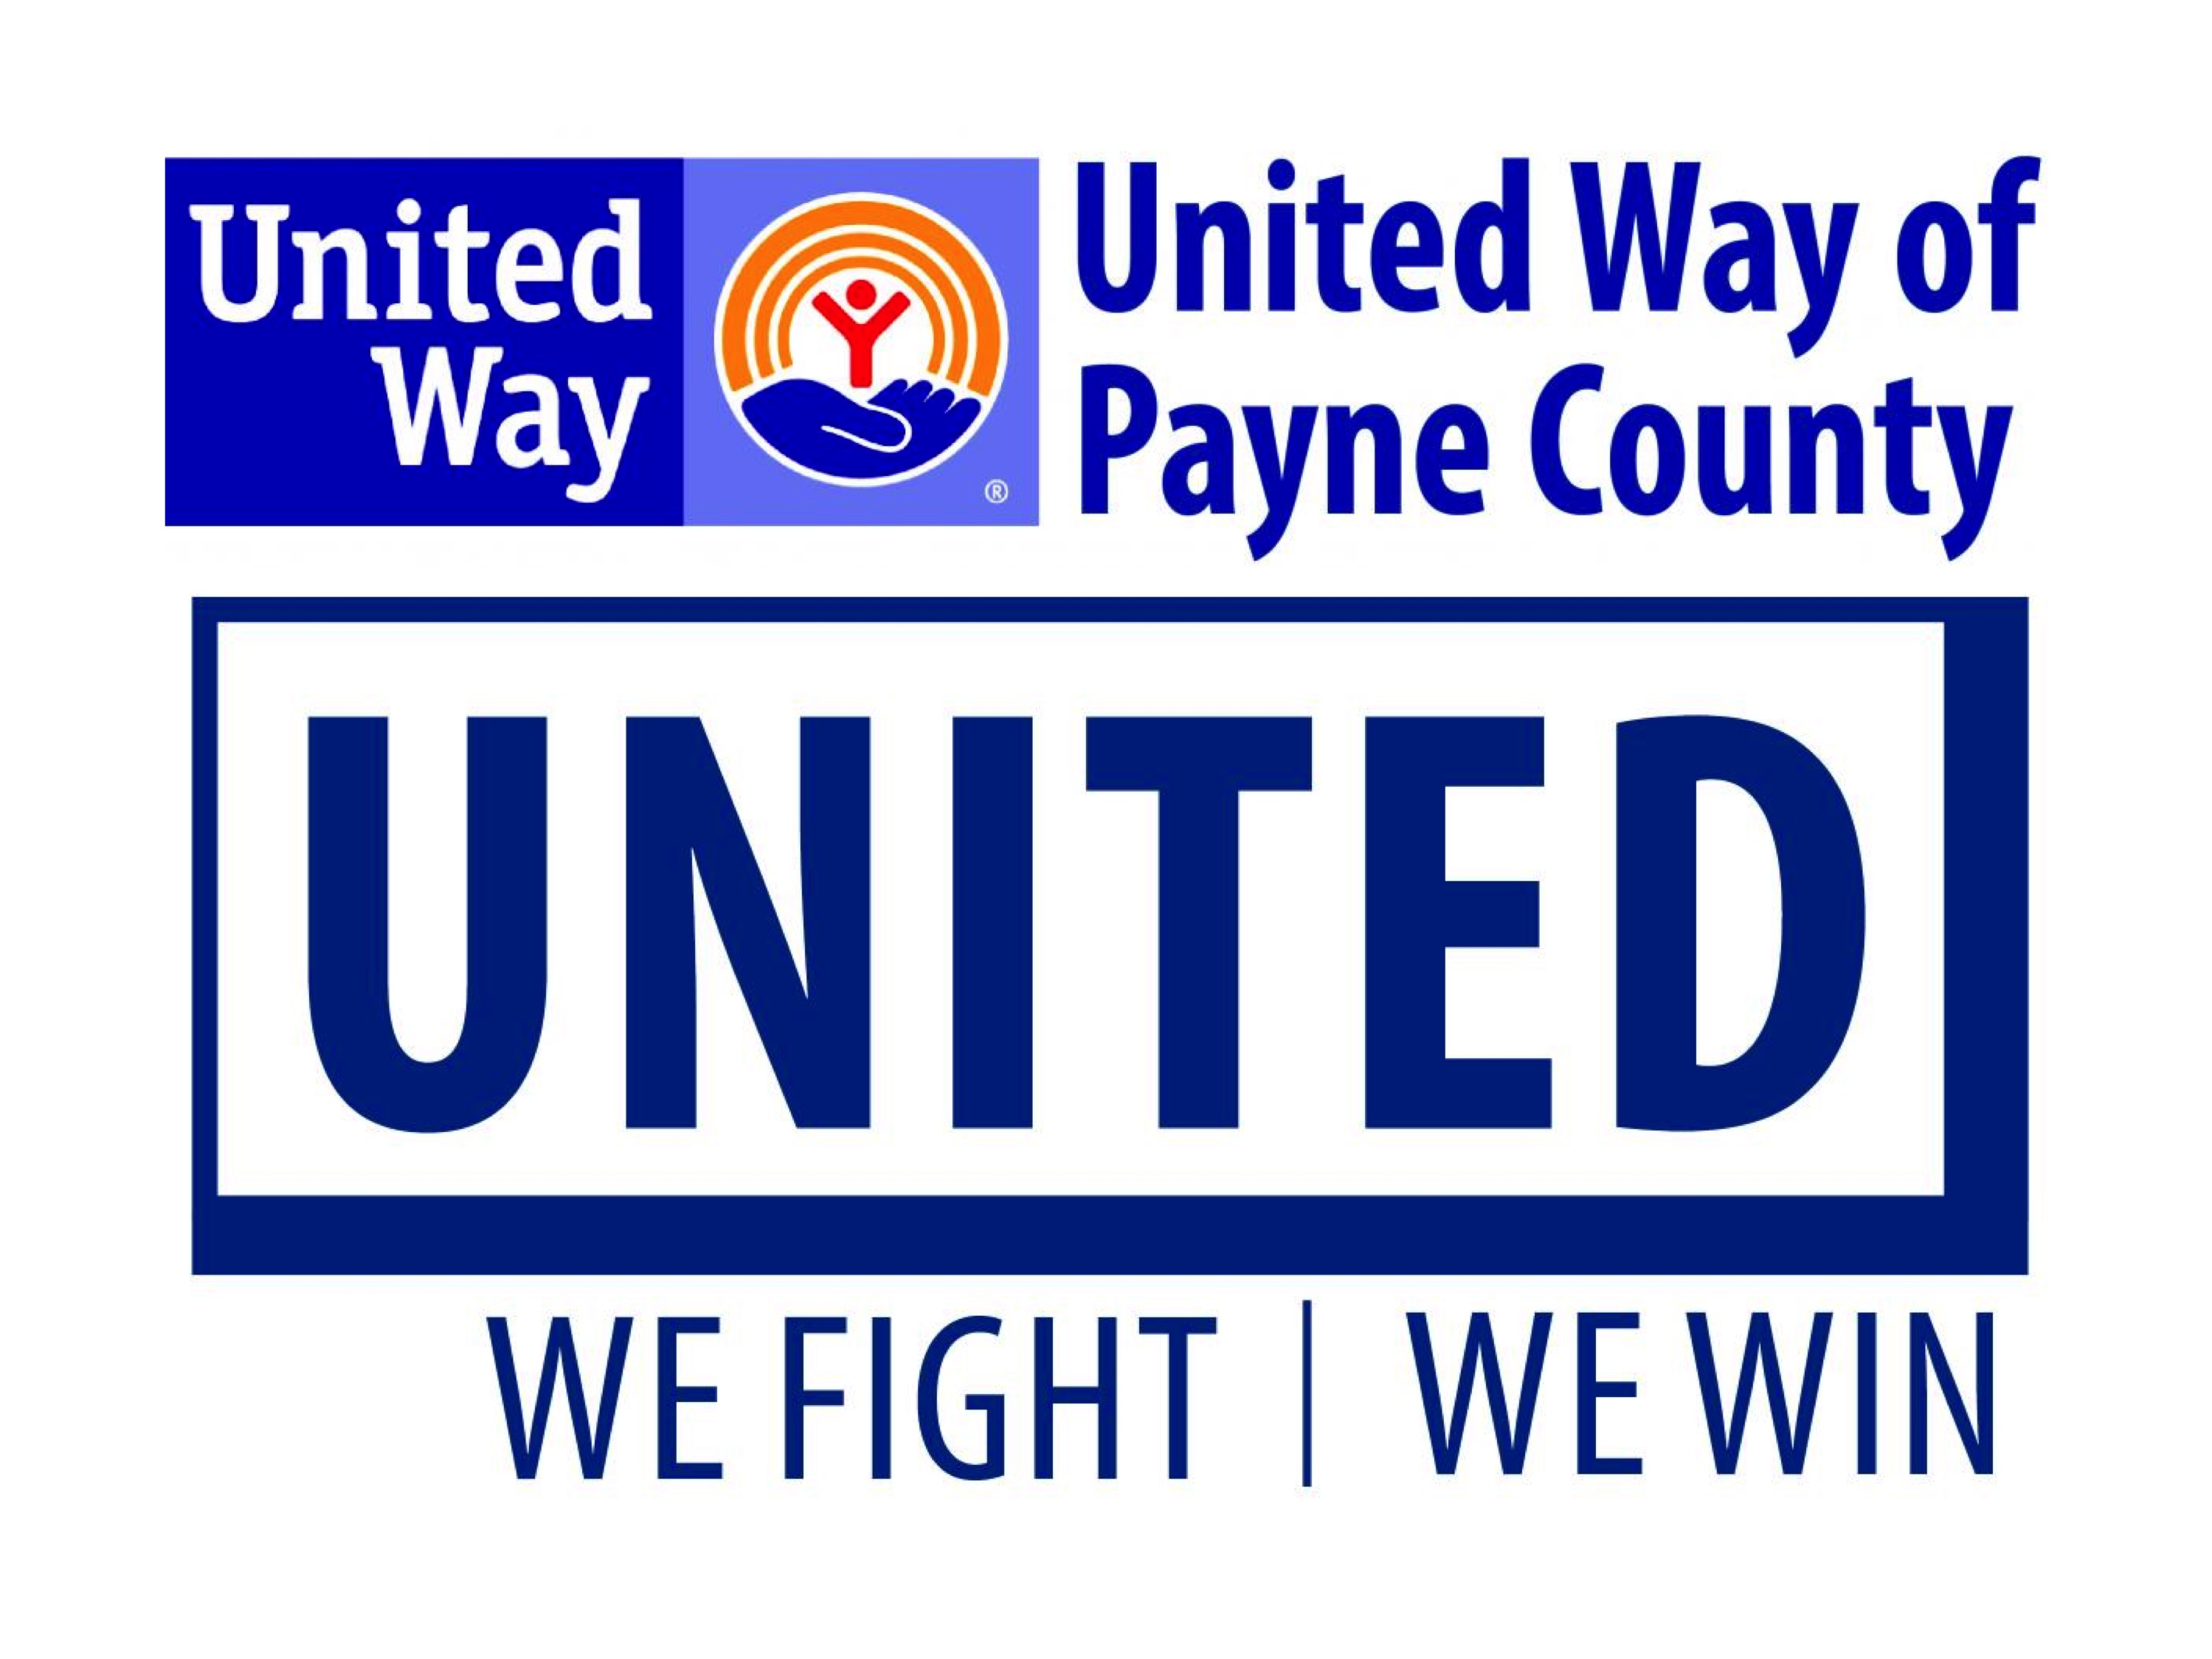 United Way of Payne County